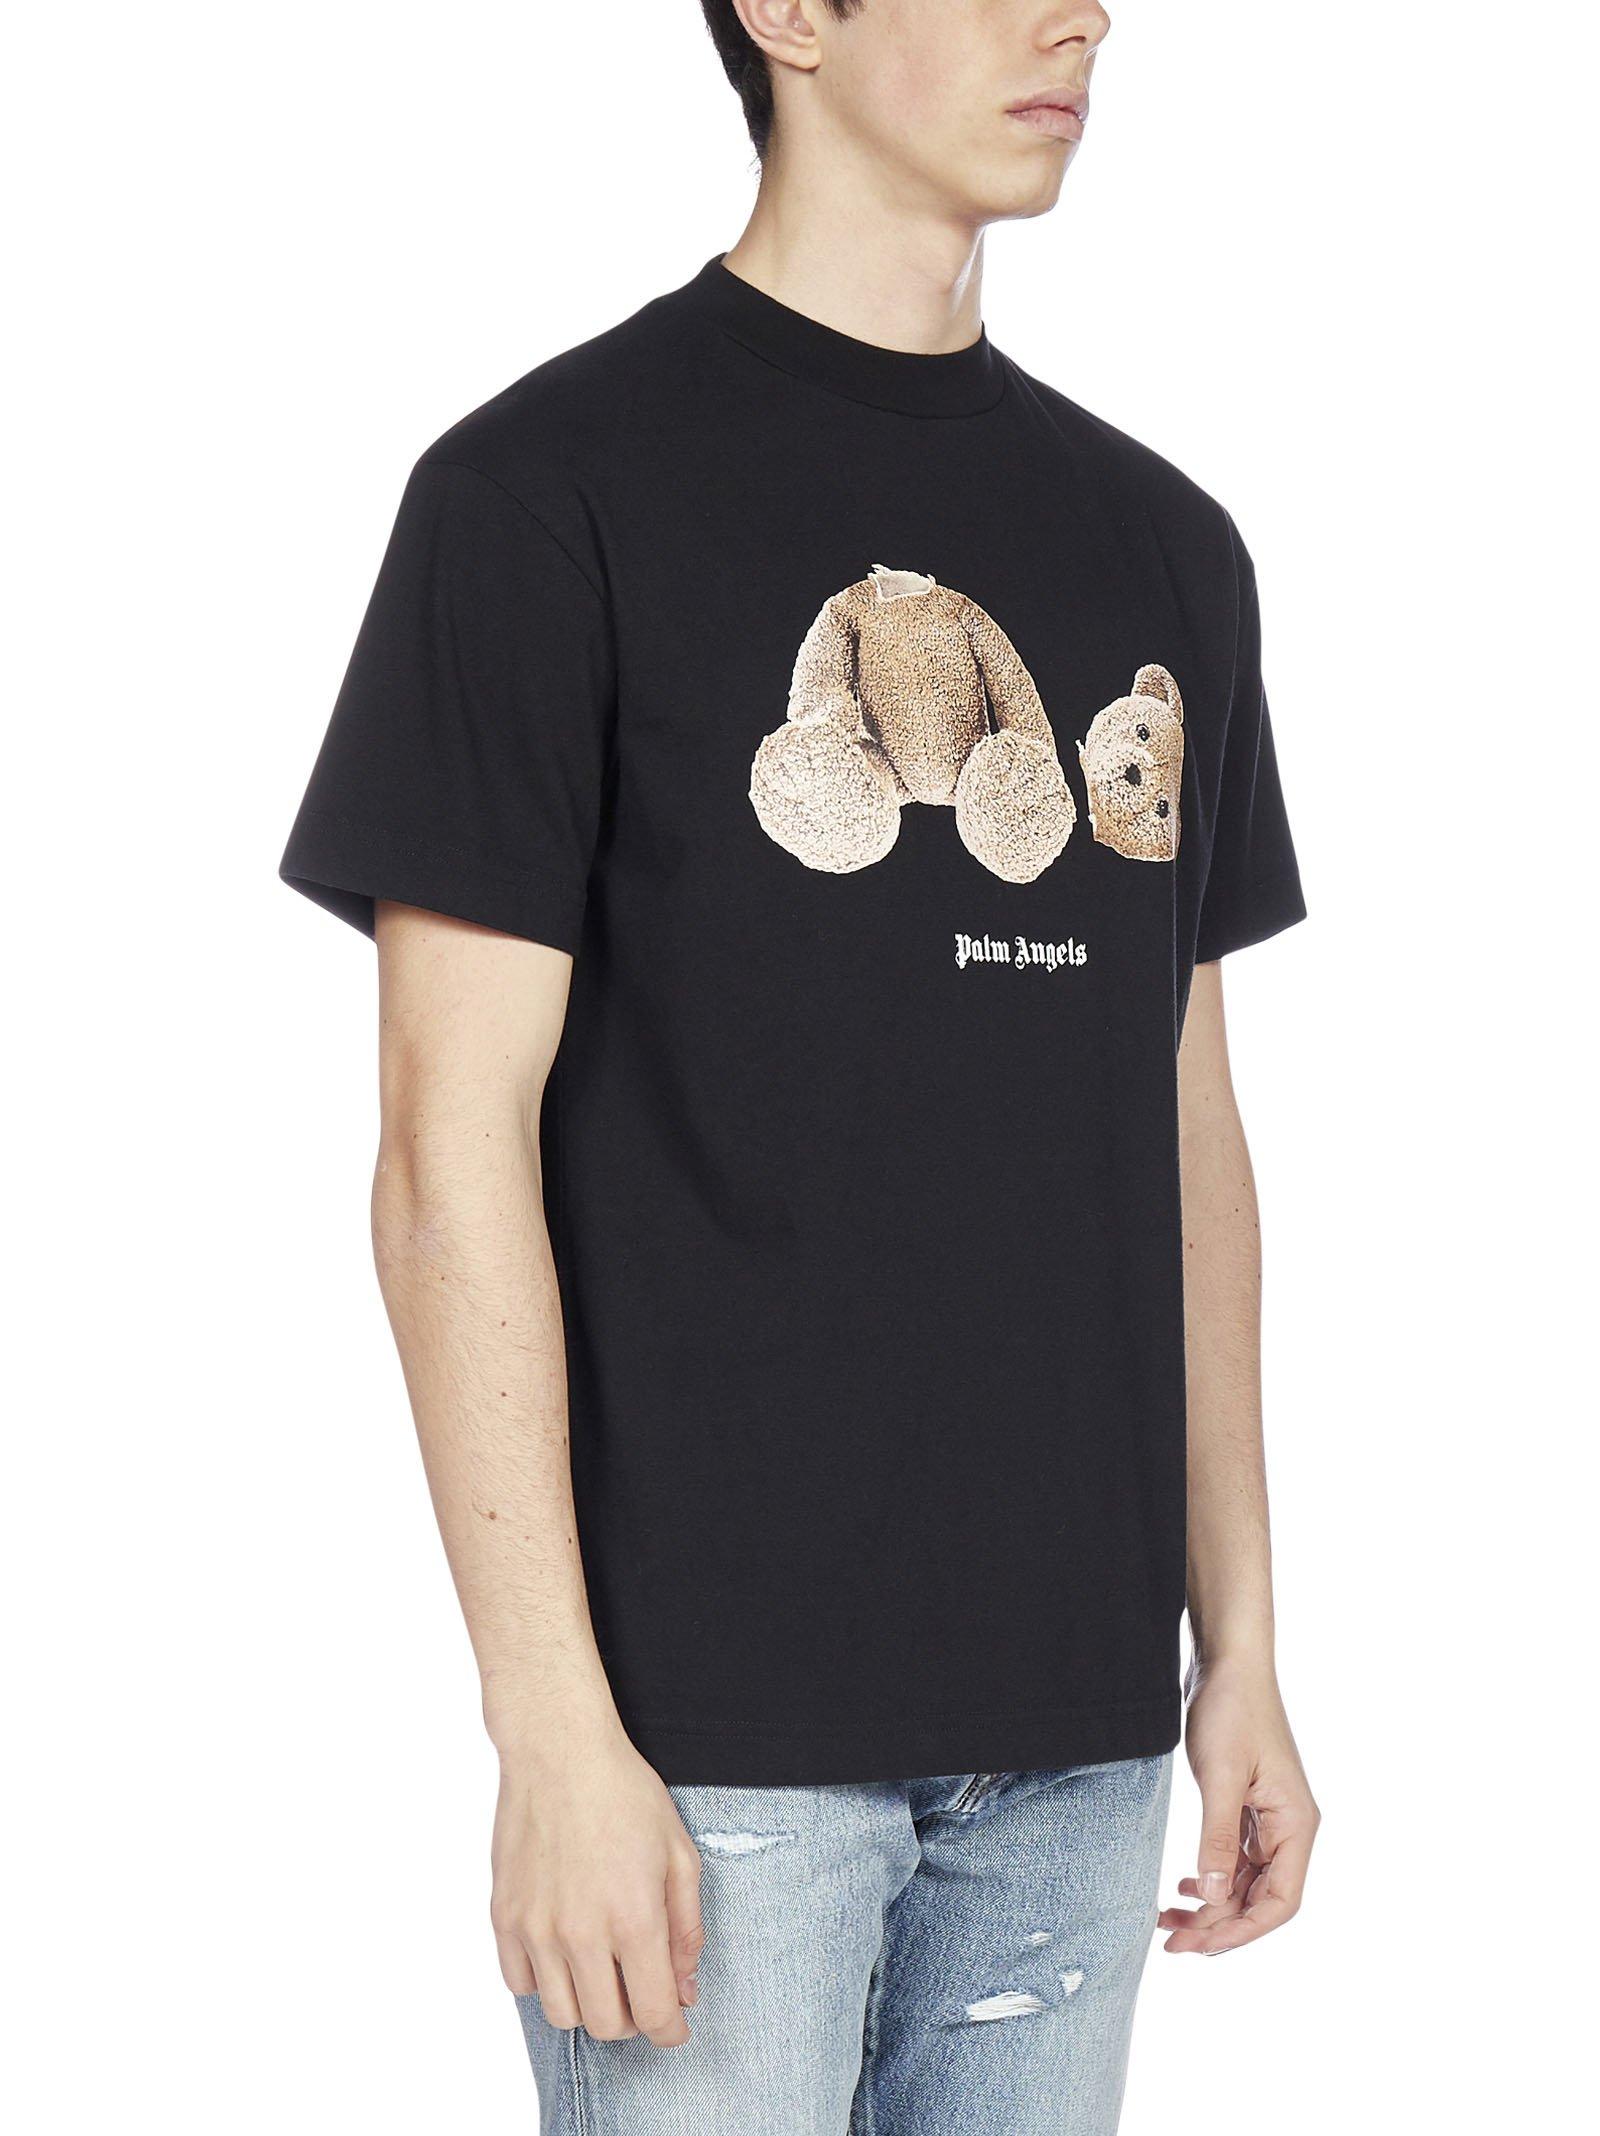 Palm Angels Cotton Teddy Bear Print T-shirt in Black for Men - Lyst